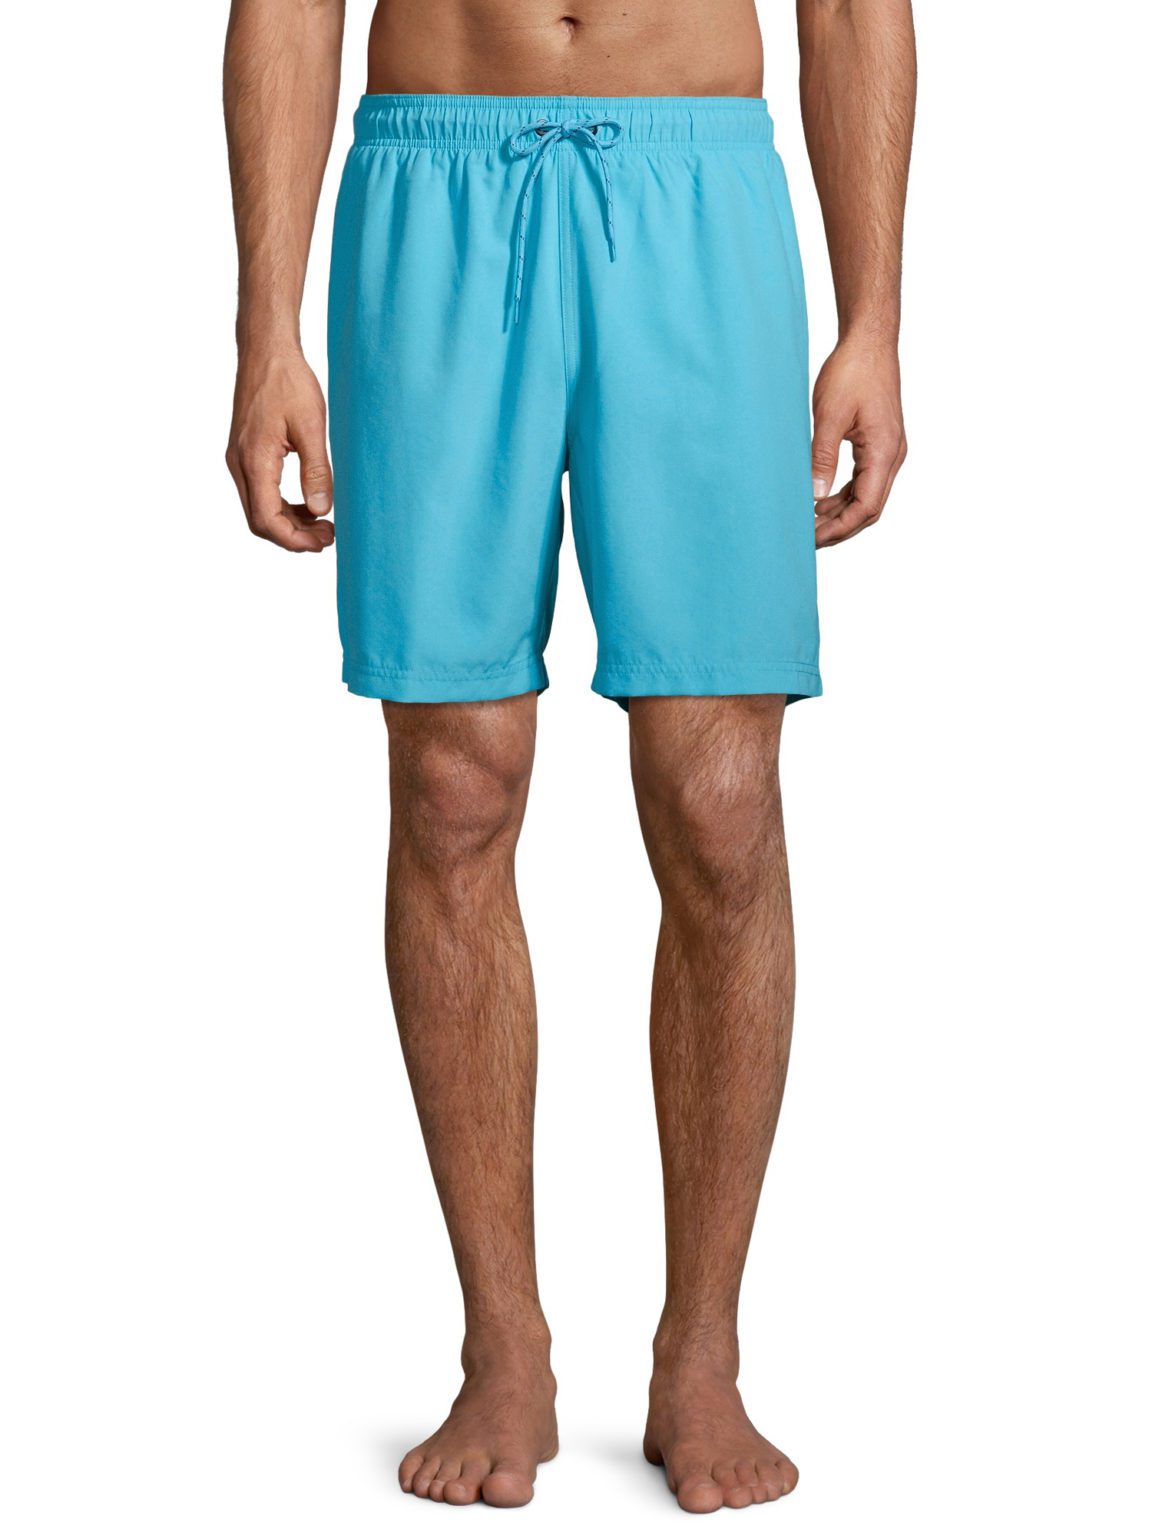 George Turquoise Stone Swim Shorts - Patriot Swimwear and Apparel